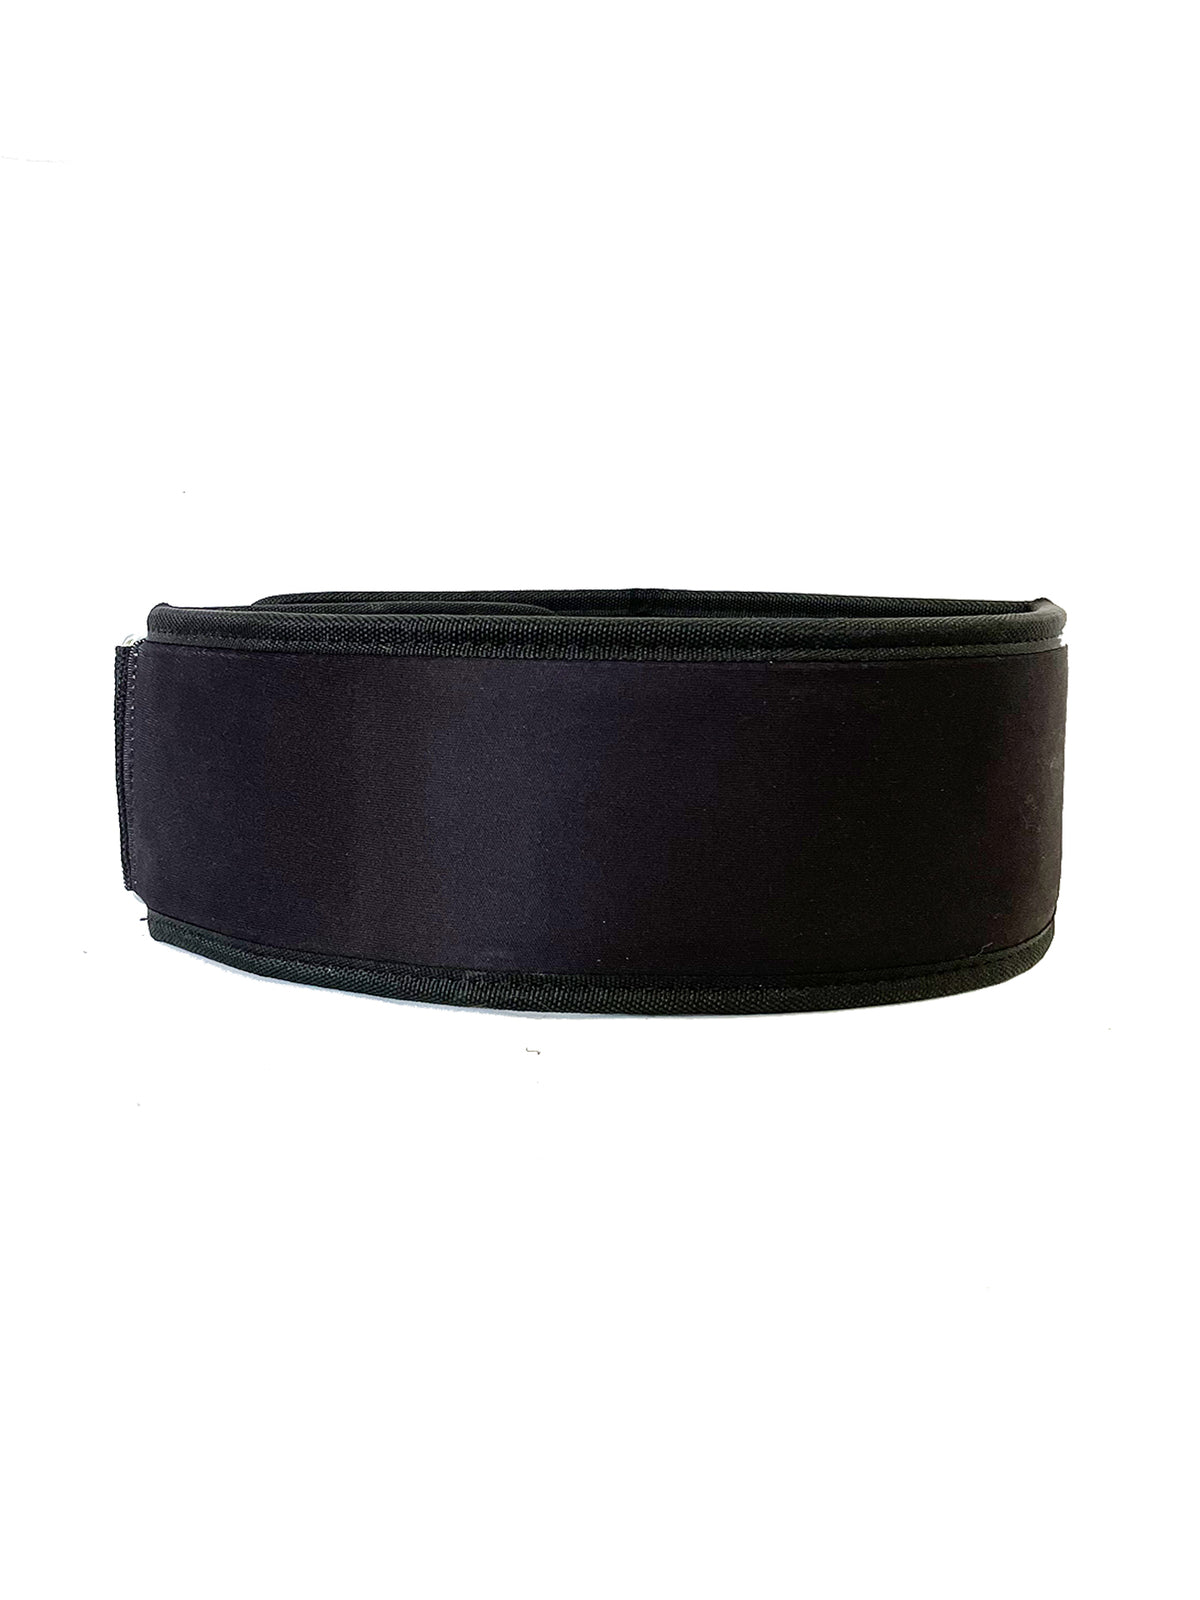 Solid Black Lifting Belt